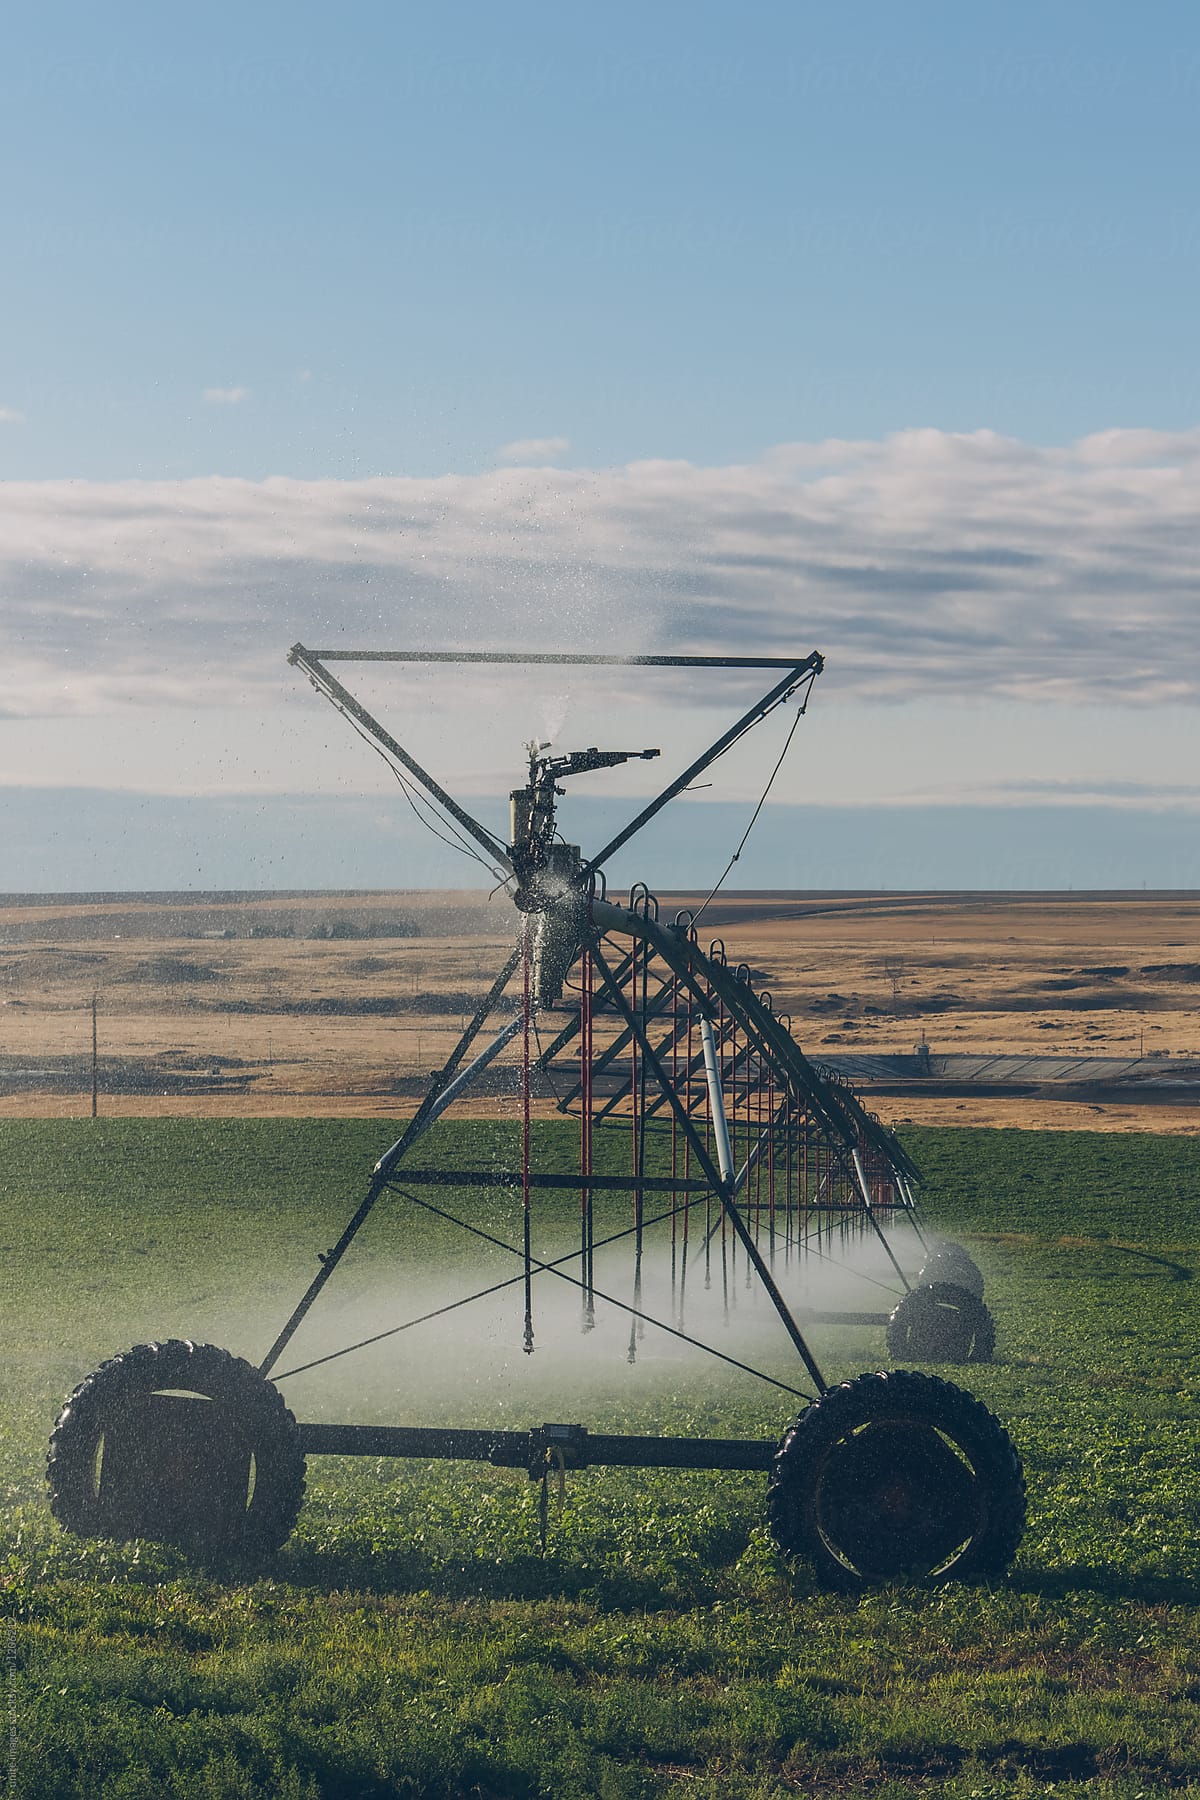 agriculture irrigation machine